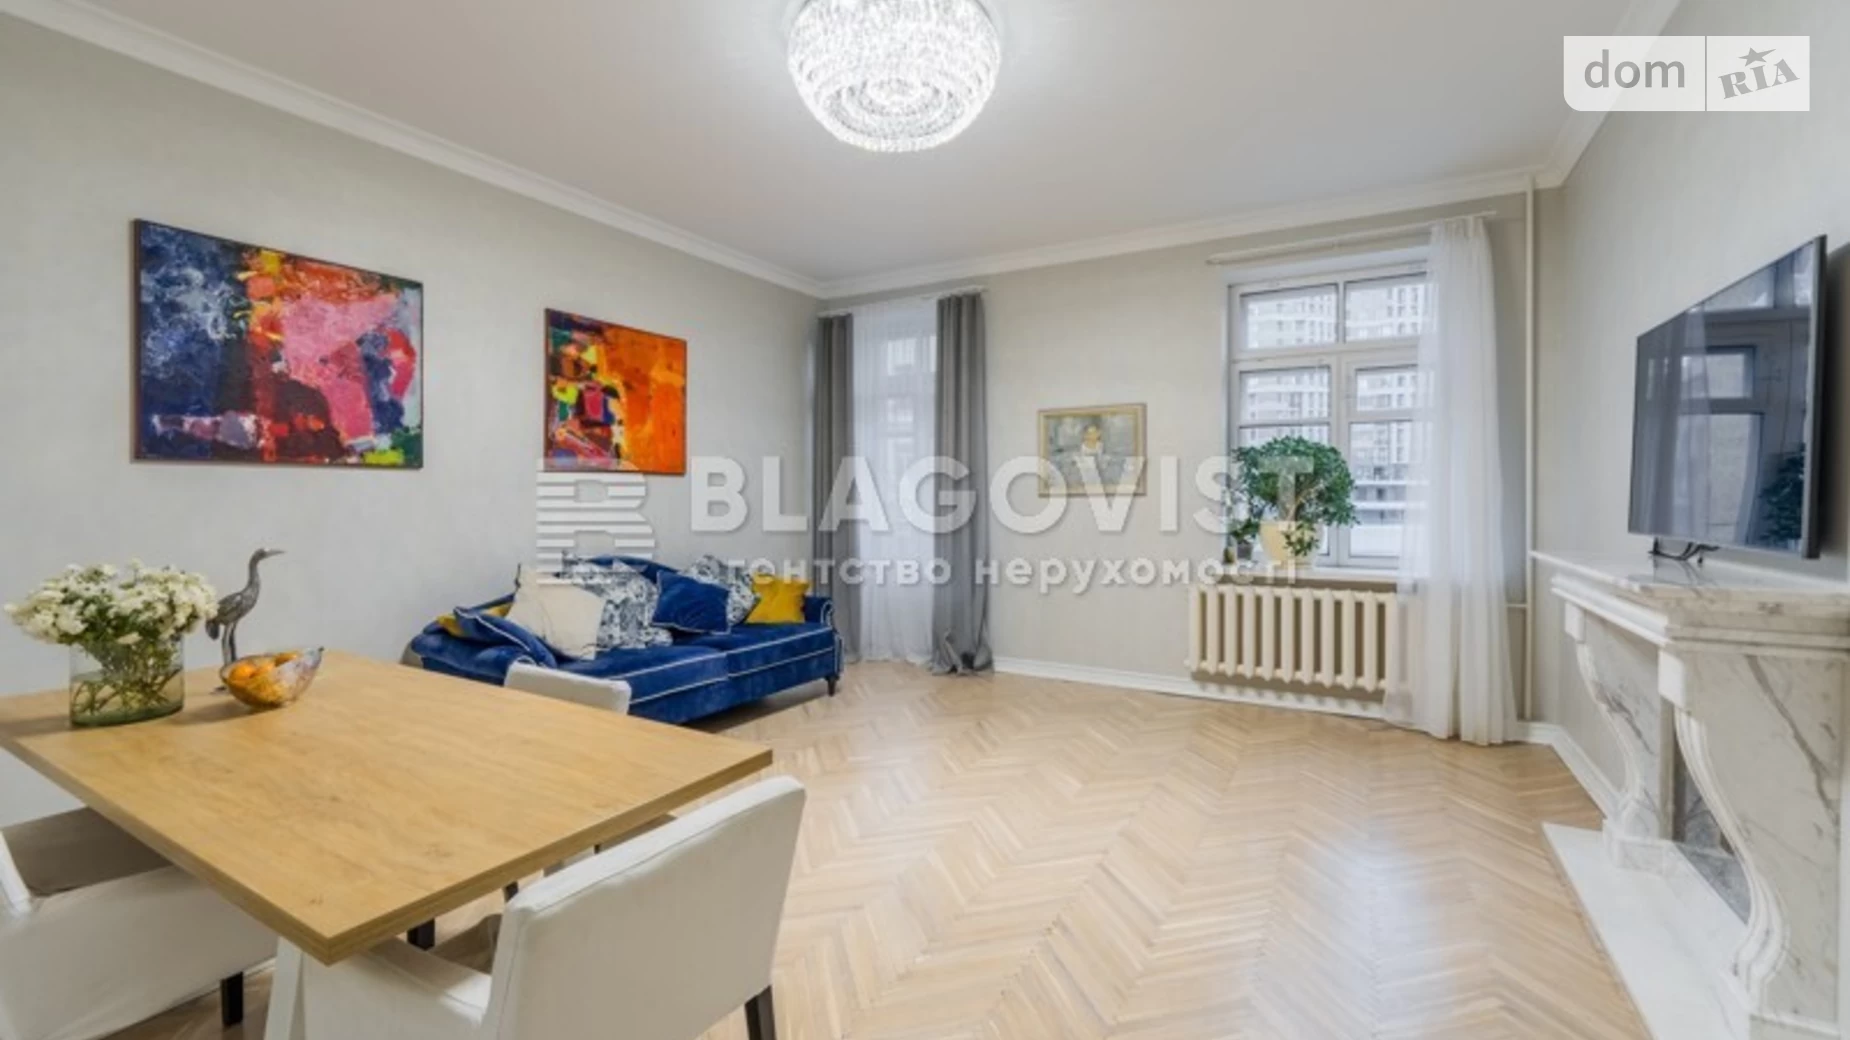 Продается 2-комнатная квартира 88.5 кв. м в Киеве, ул. Вячеслава Липинского, 10 - фото 3